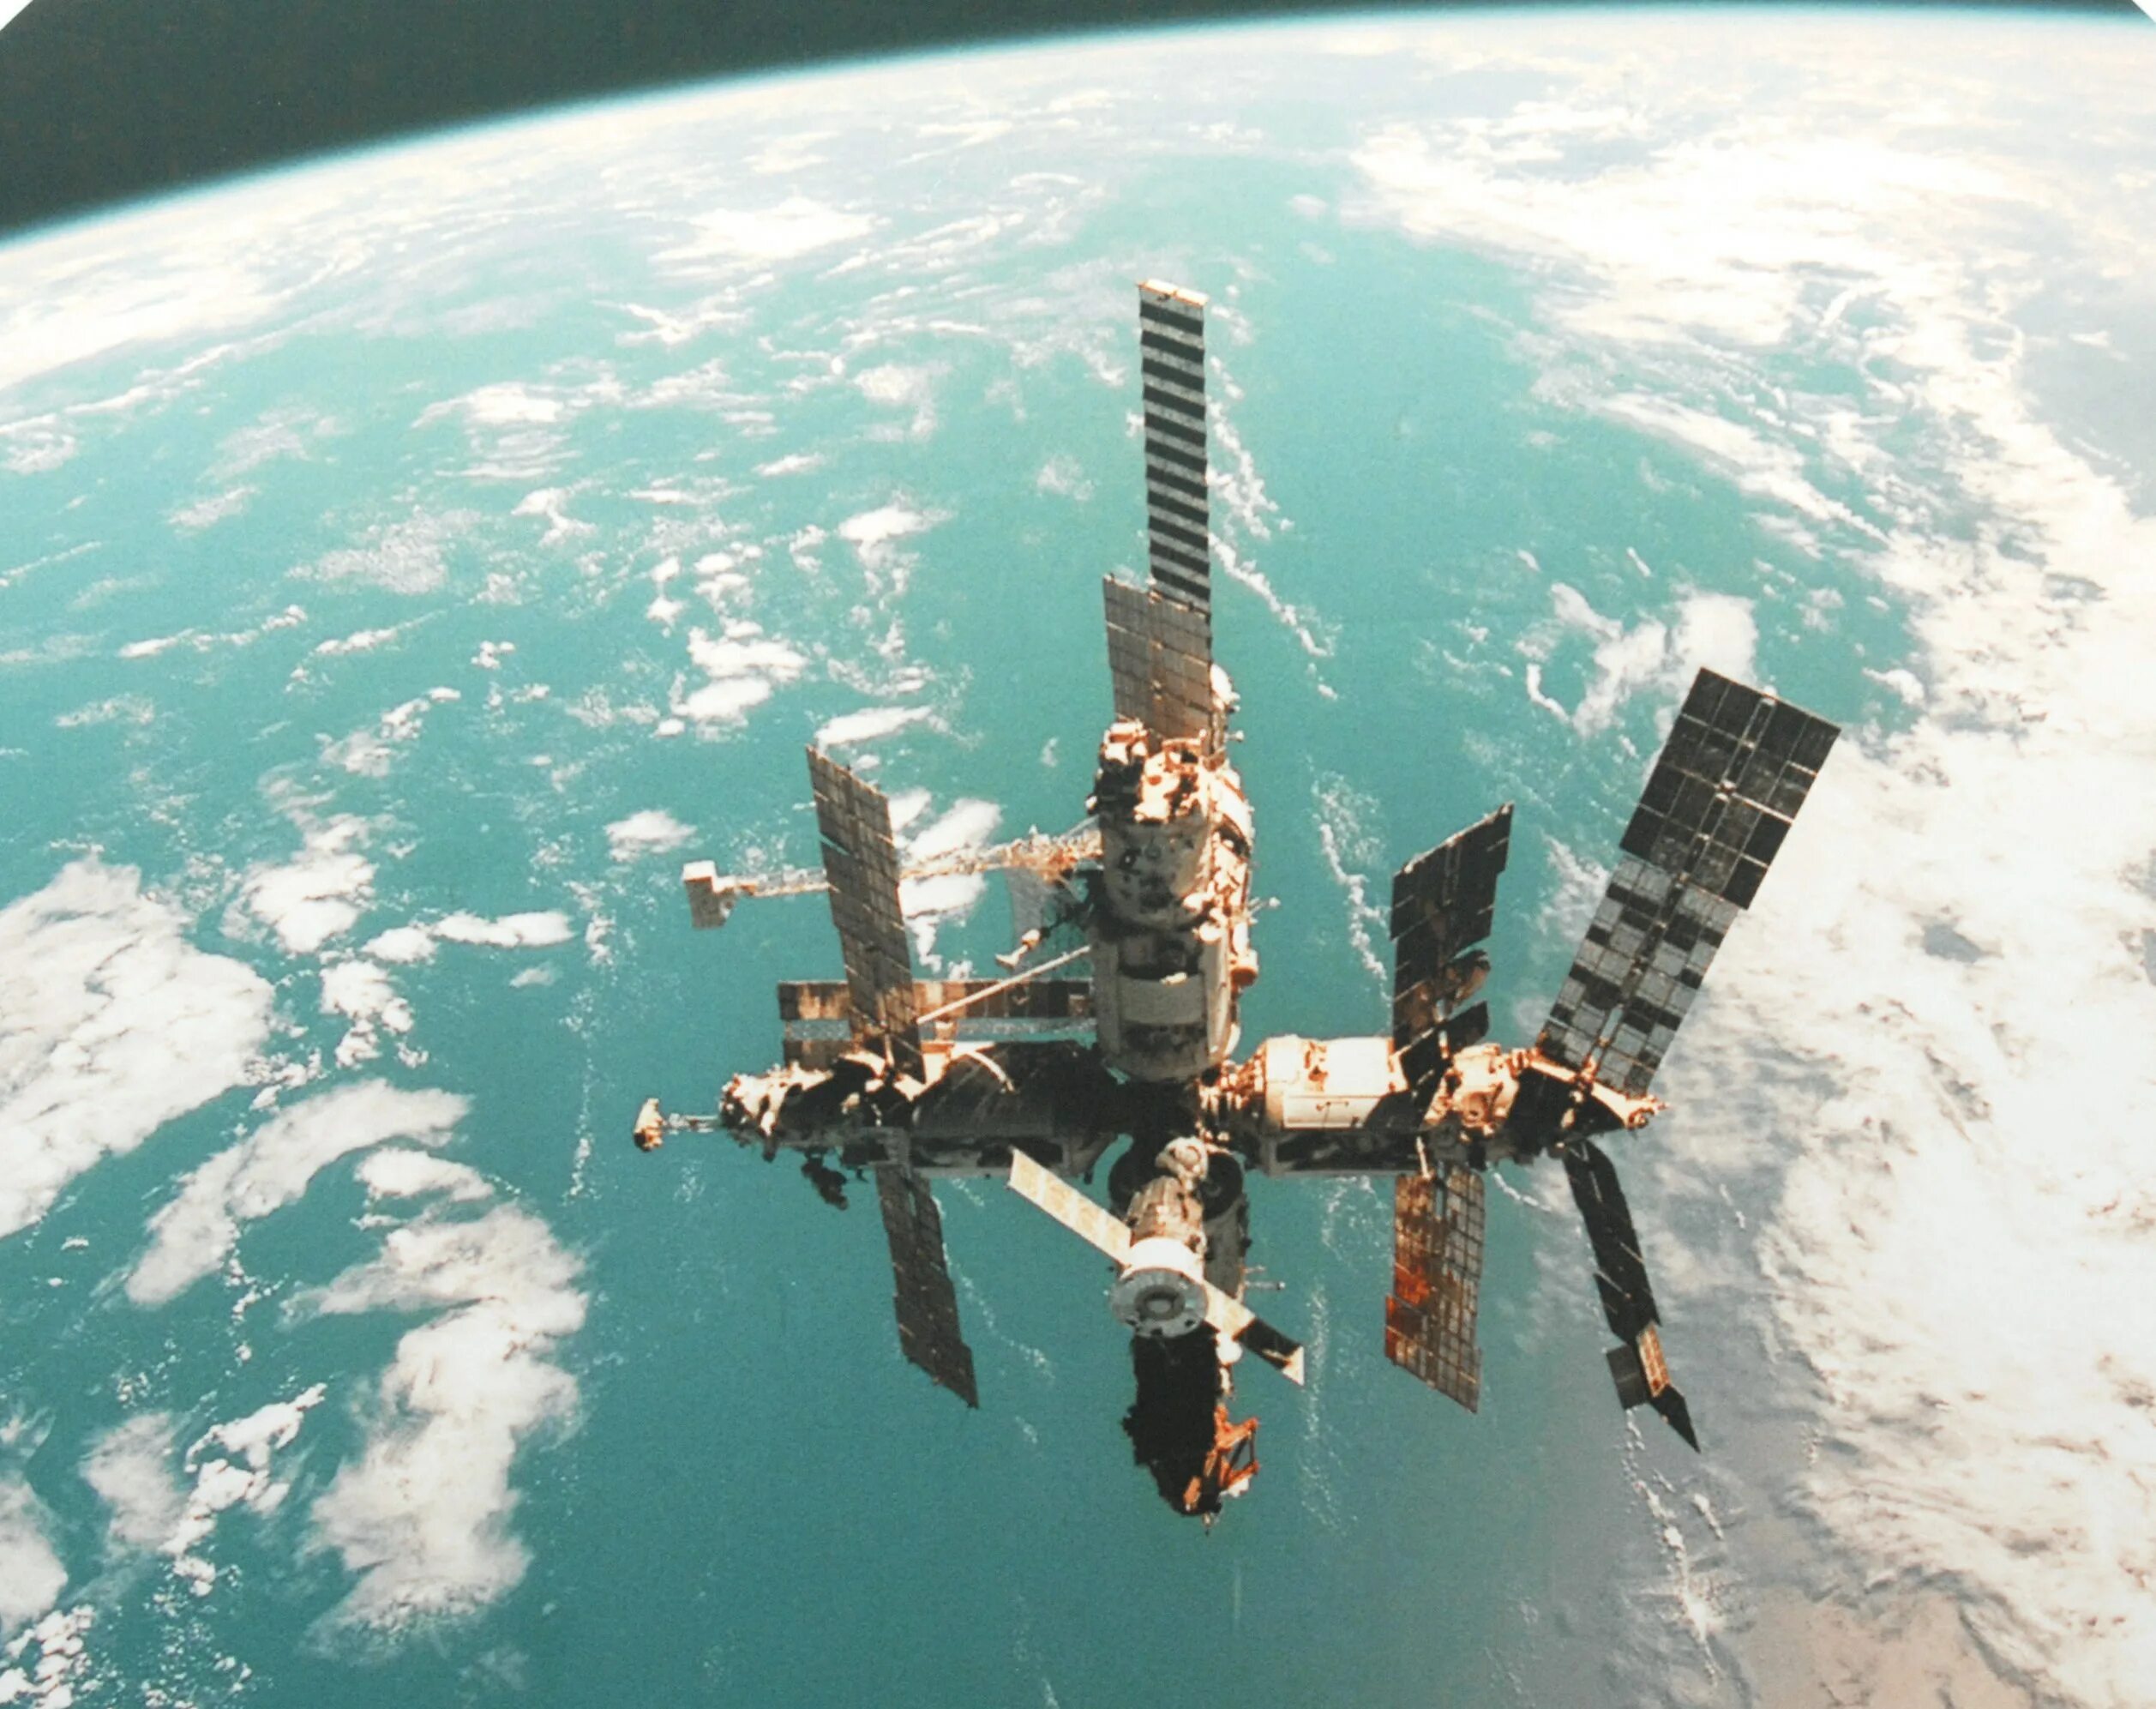 Международная станция мир. Орбитальная научная станция мир. Орбитальная станция мир 2001. Мир-2 орбитальная станция. МКС СССР.